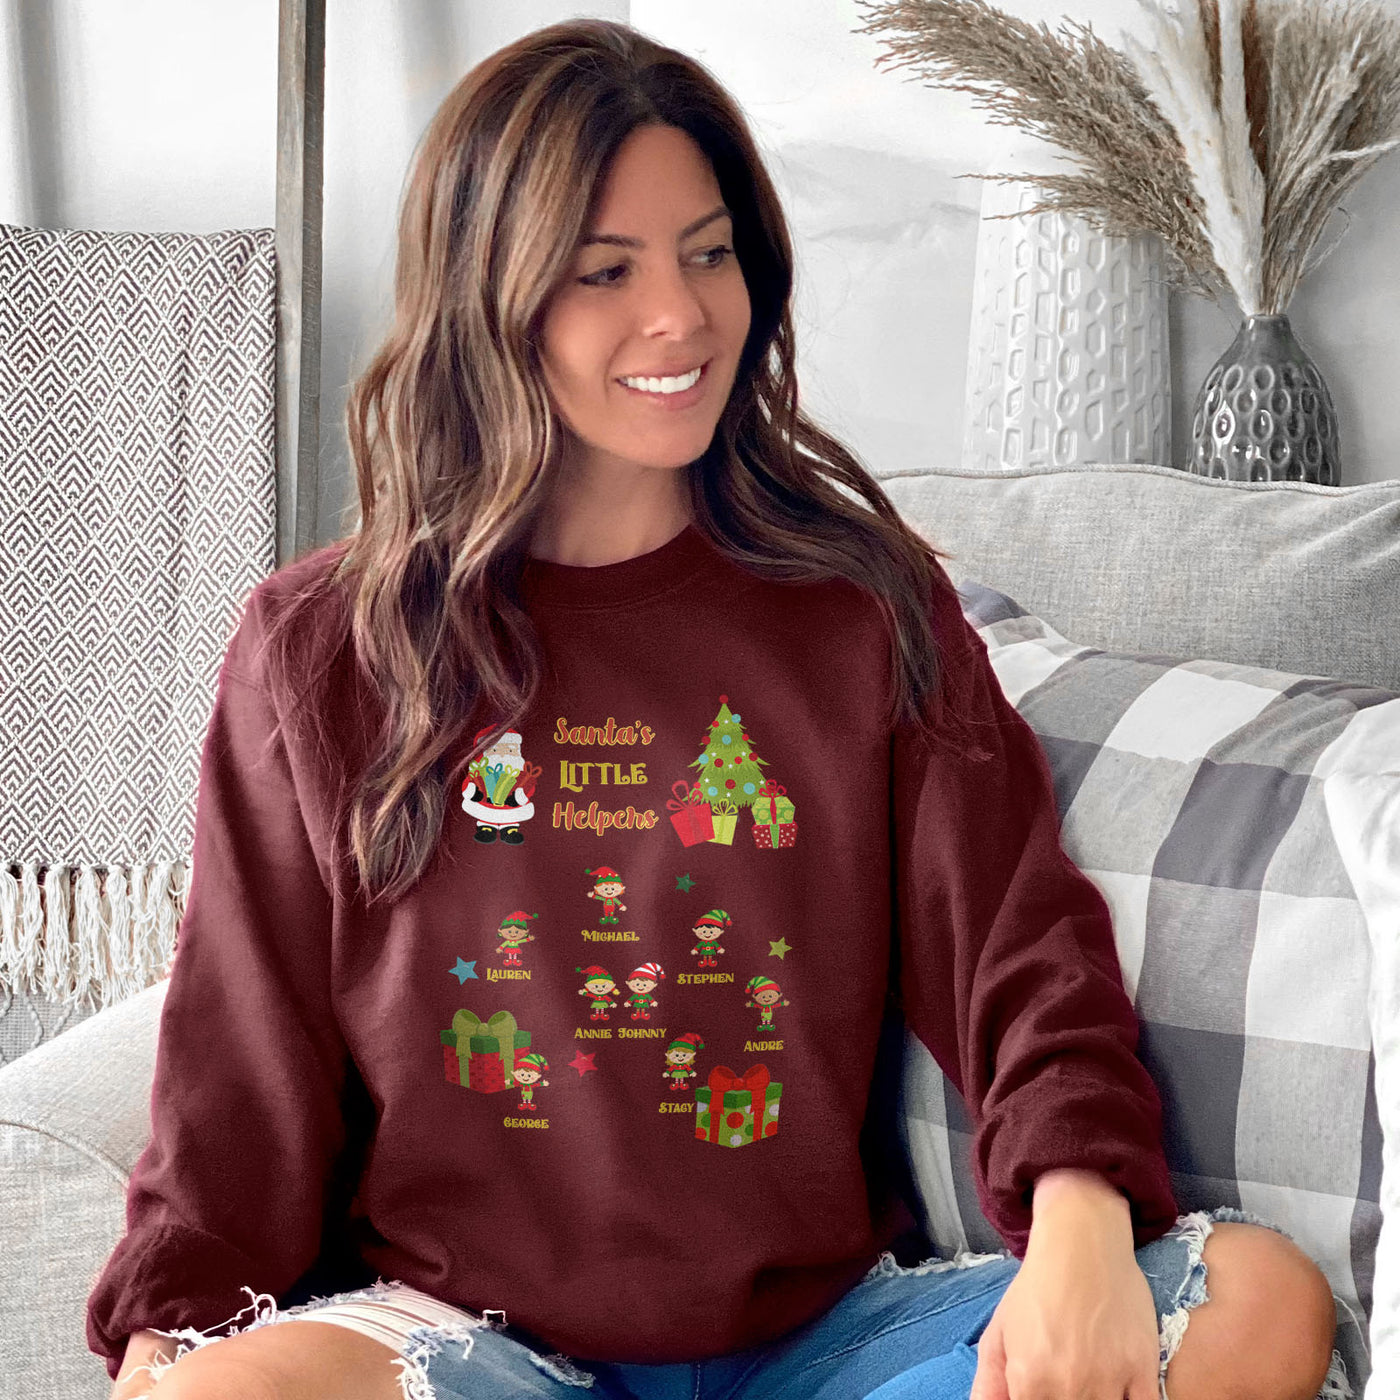 Personalized Santa's Little Helpers Sweater